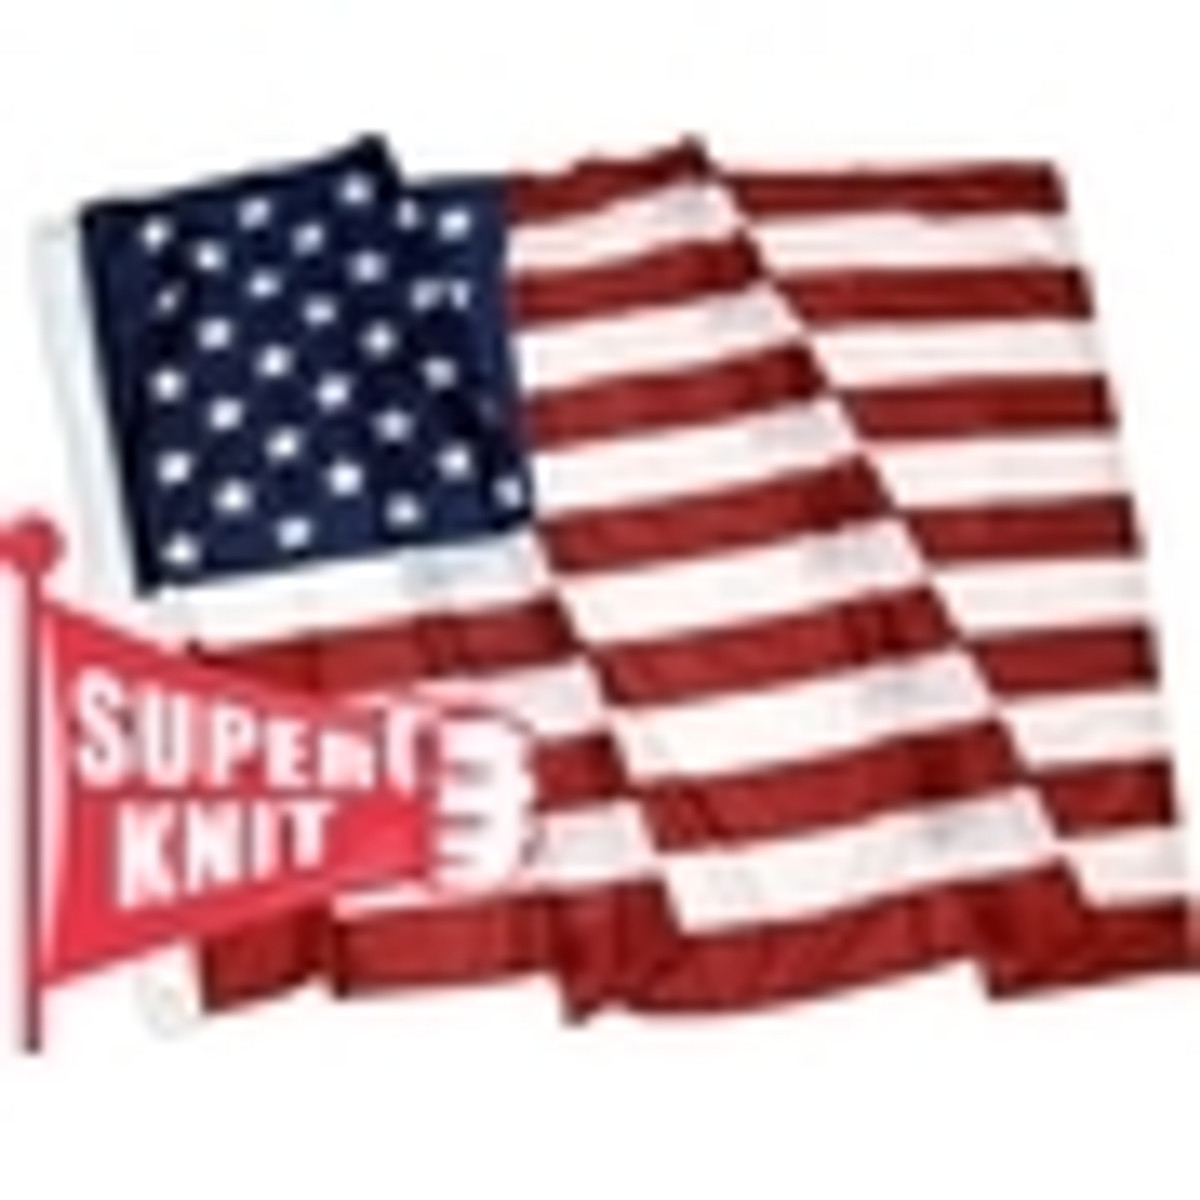 Super Knit US Flags